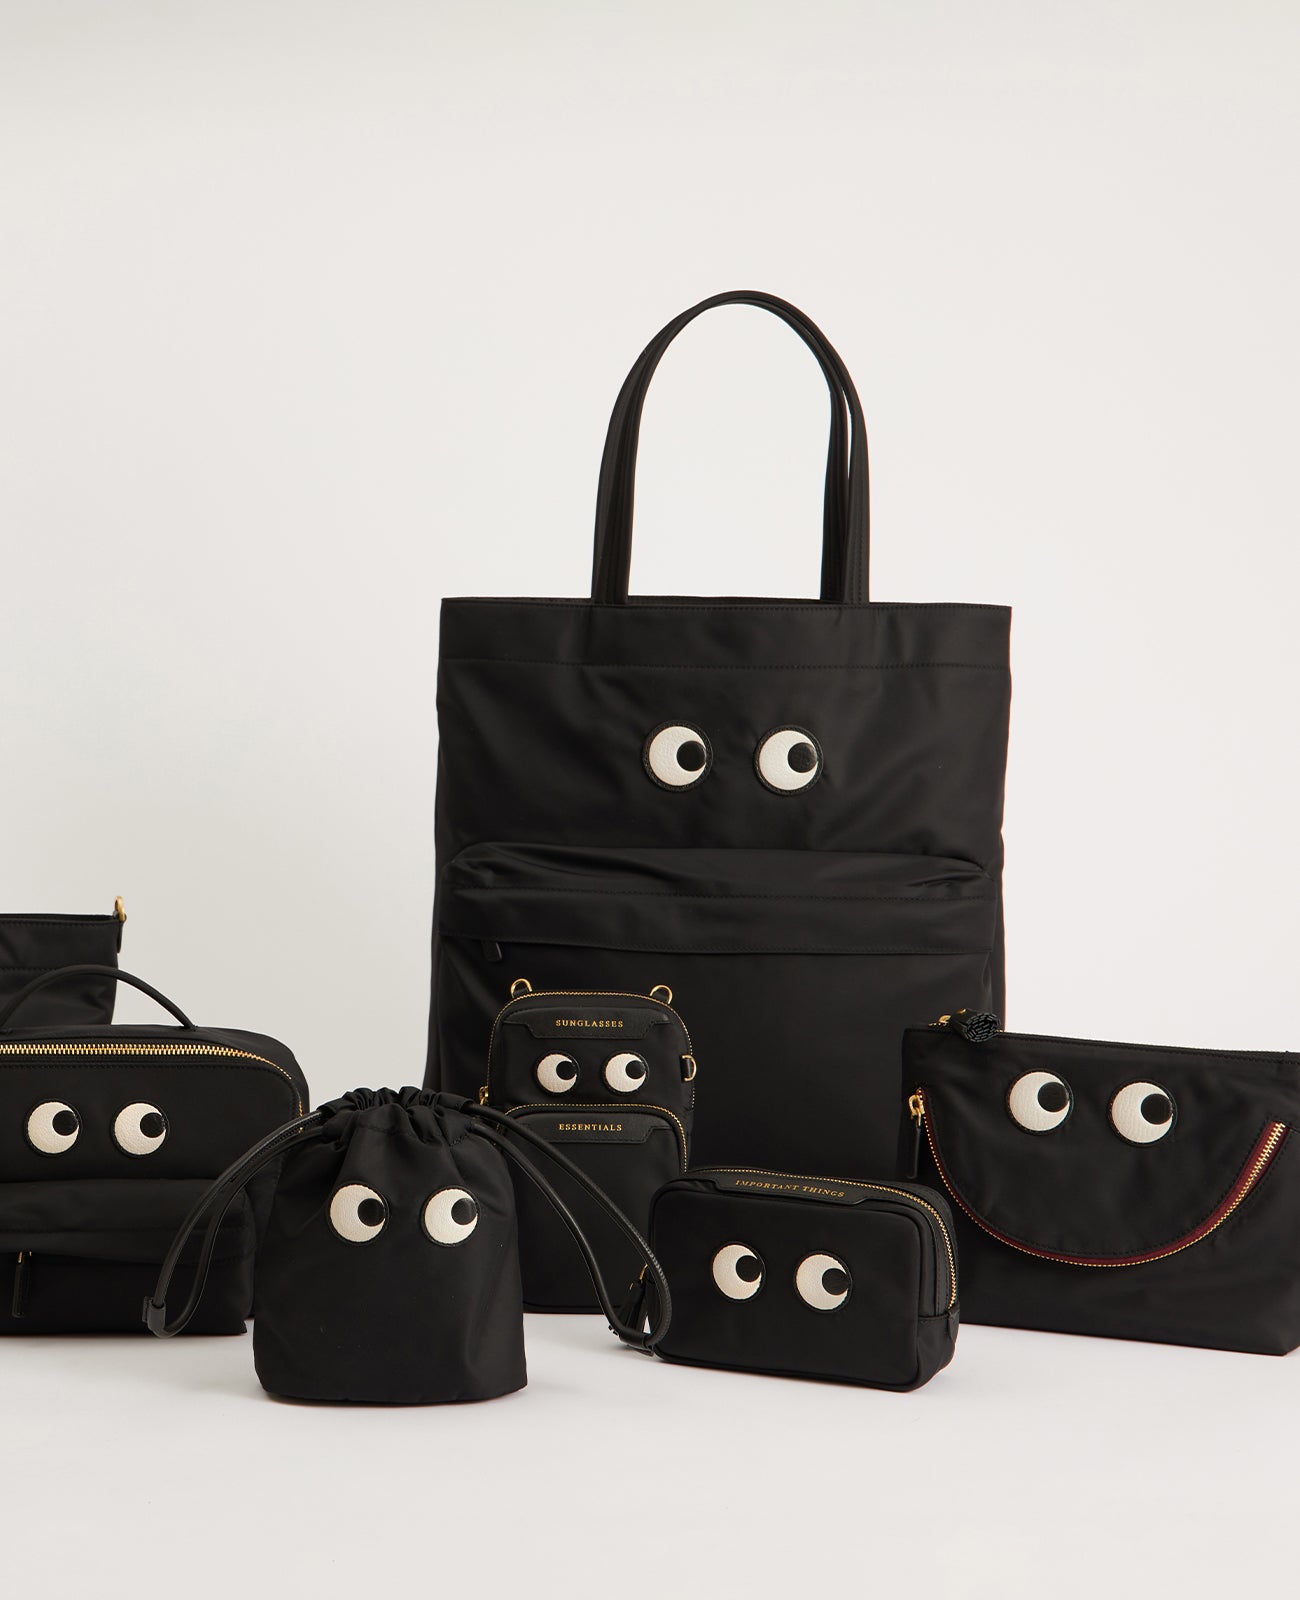 Anya Hindmarch | Luxury Bags & Accessories | Anya Hindmarch UK